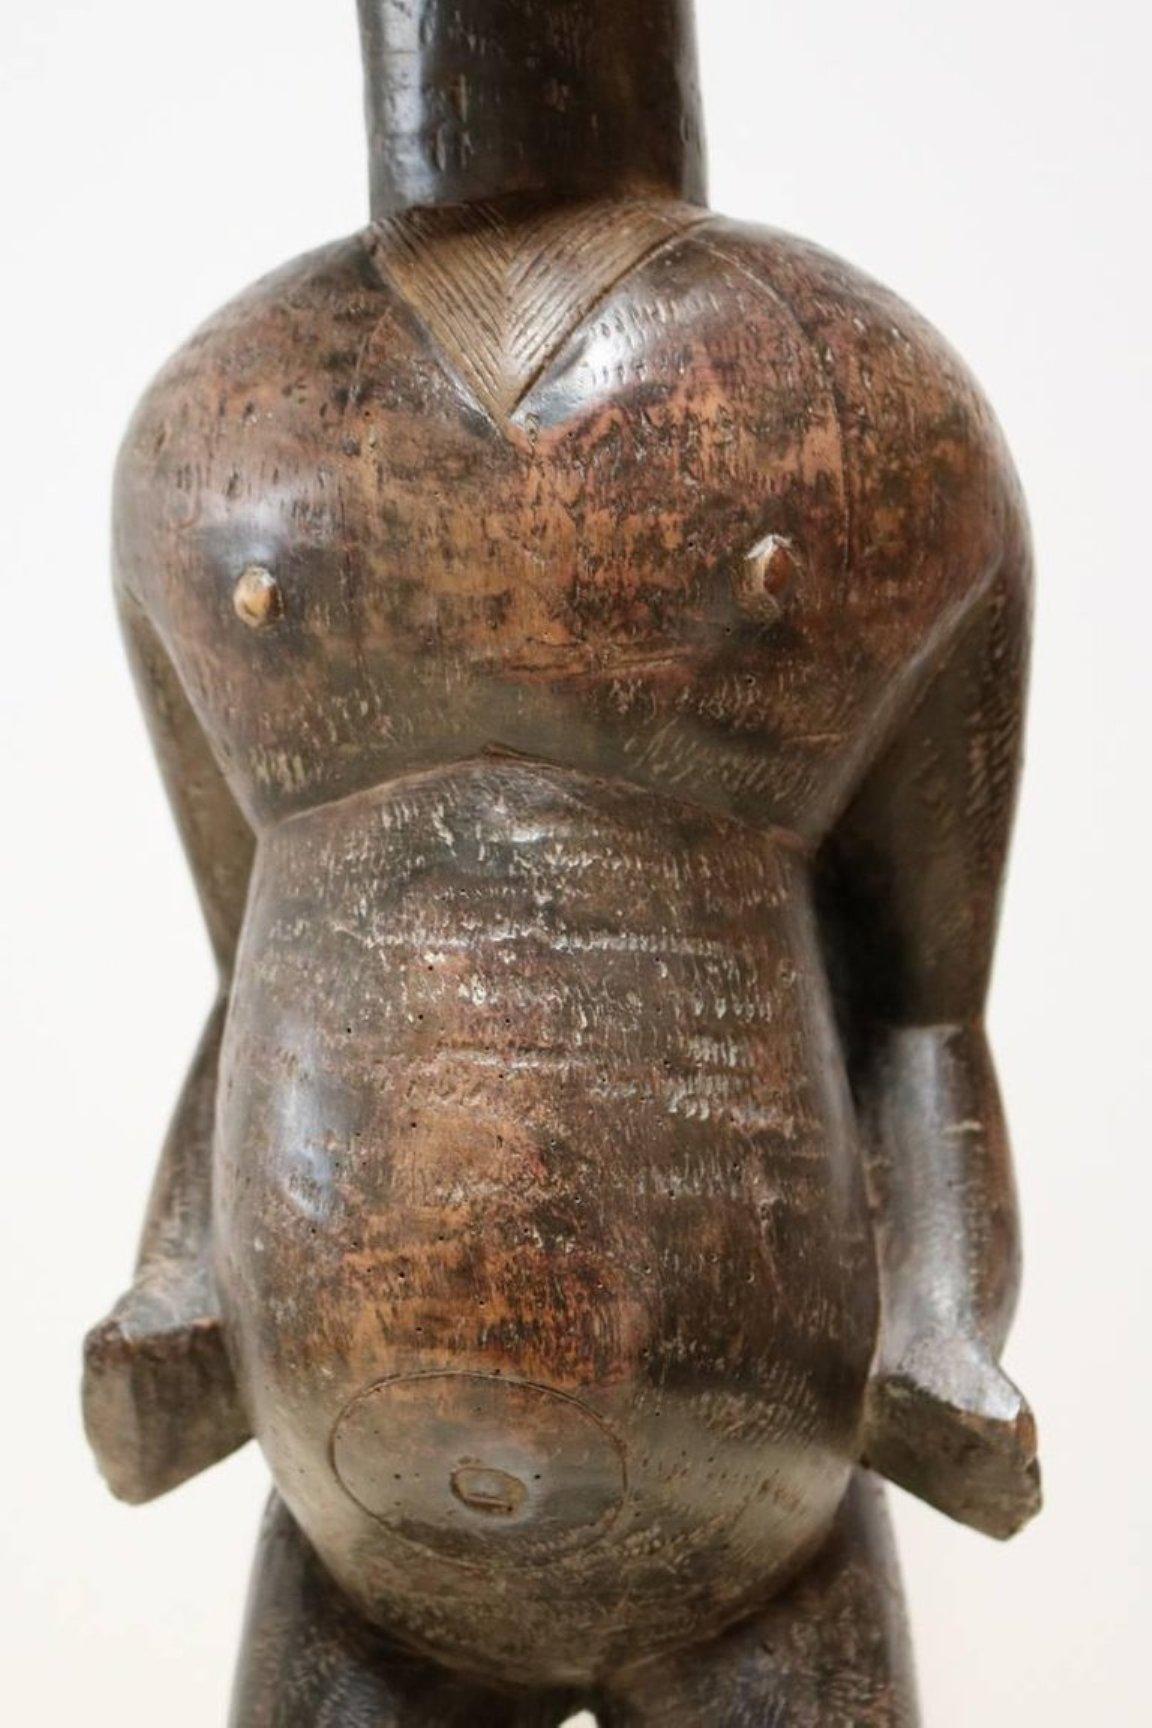 Carved wood figure by West African Lobi People.

